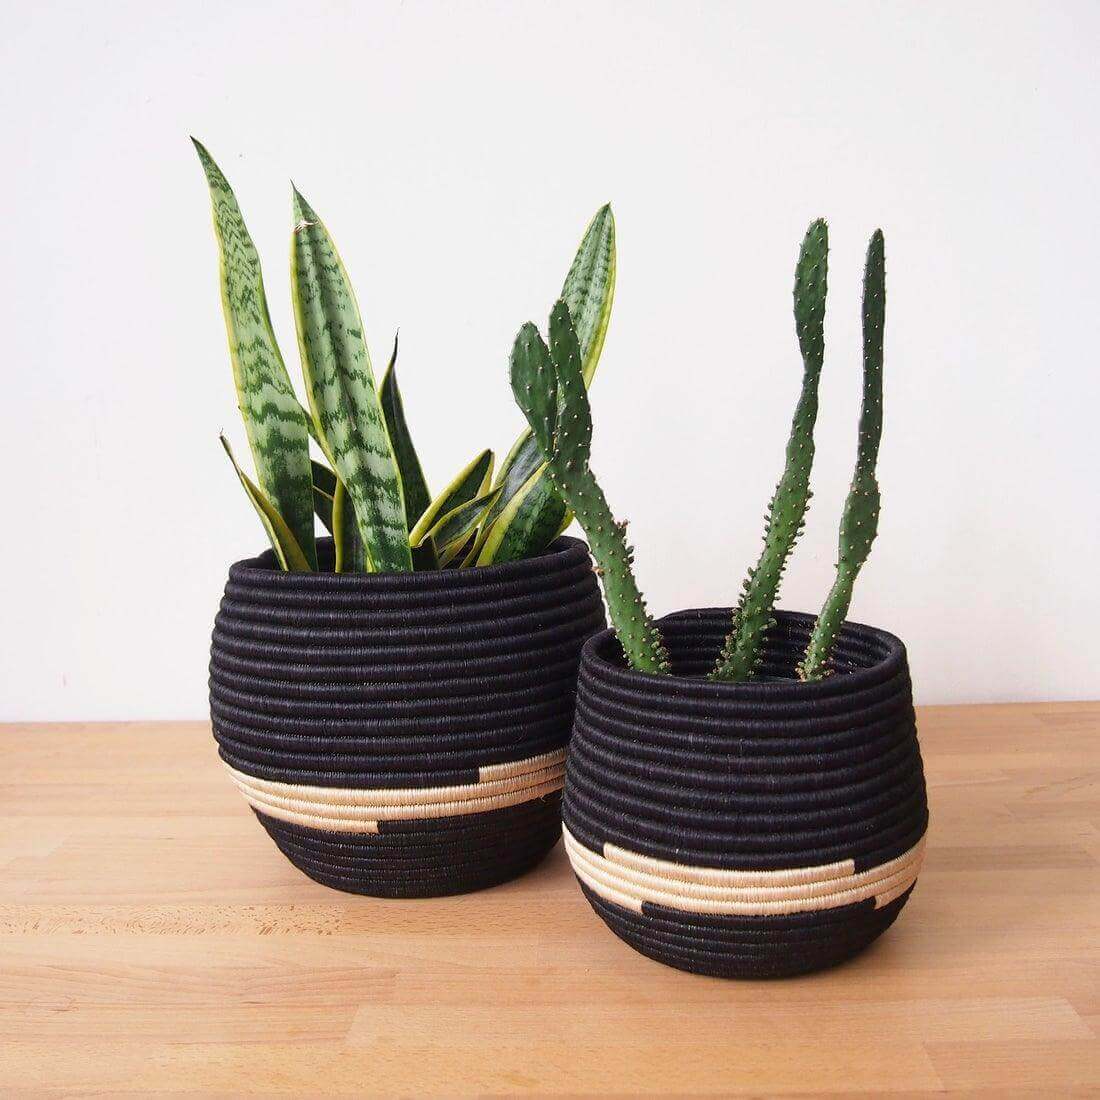 Artisan seagrass plant pots from Rwanda